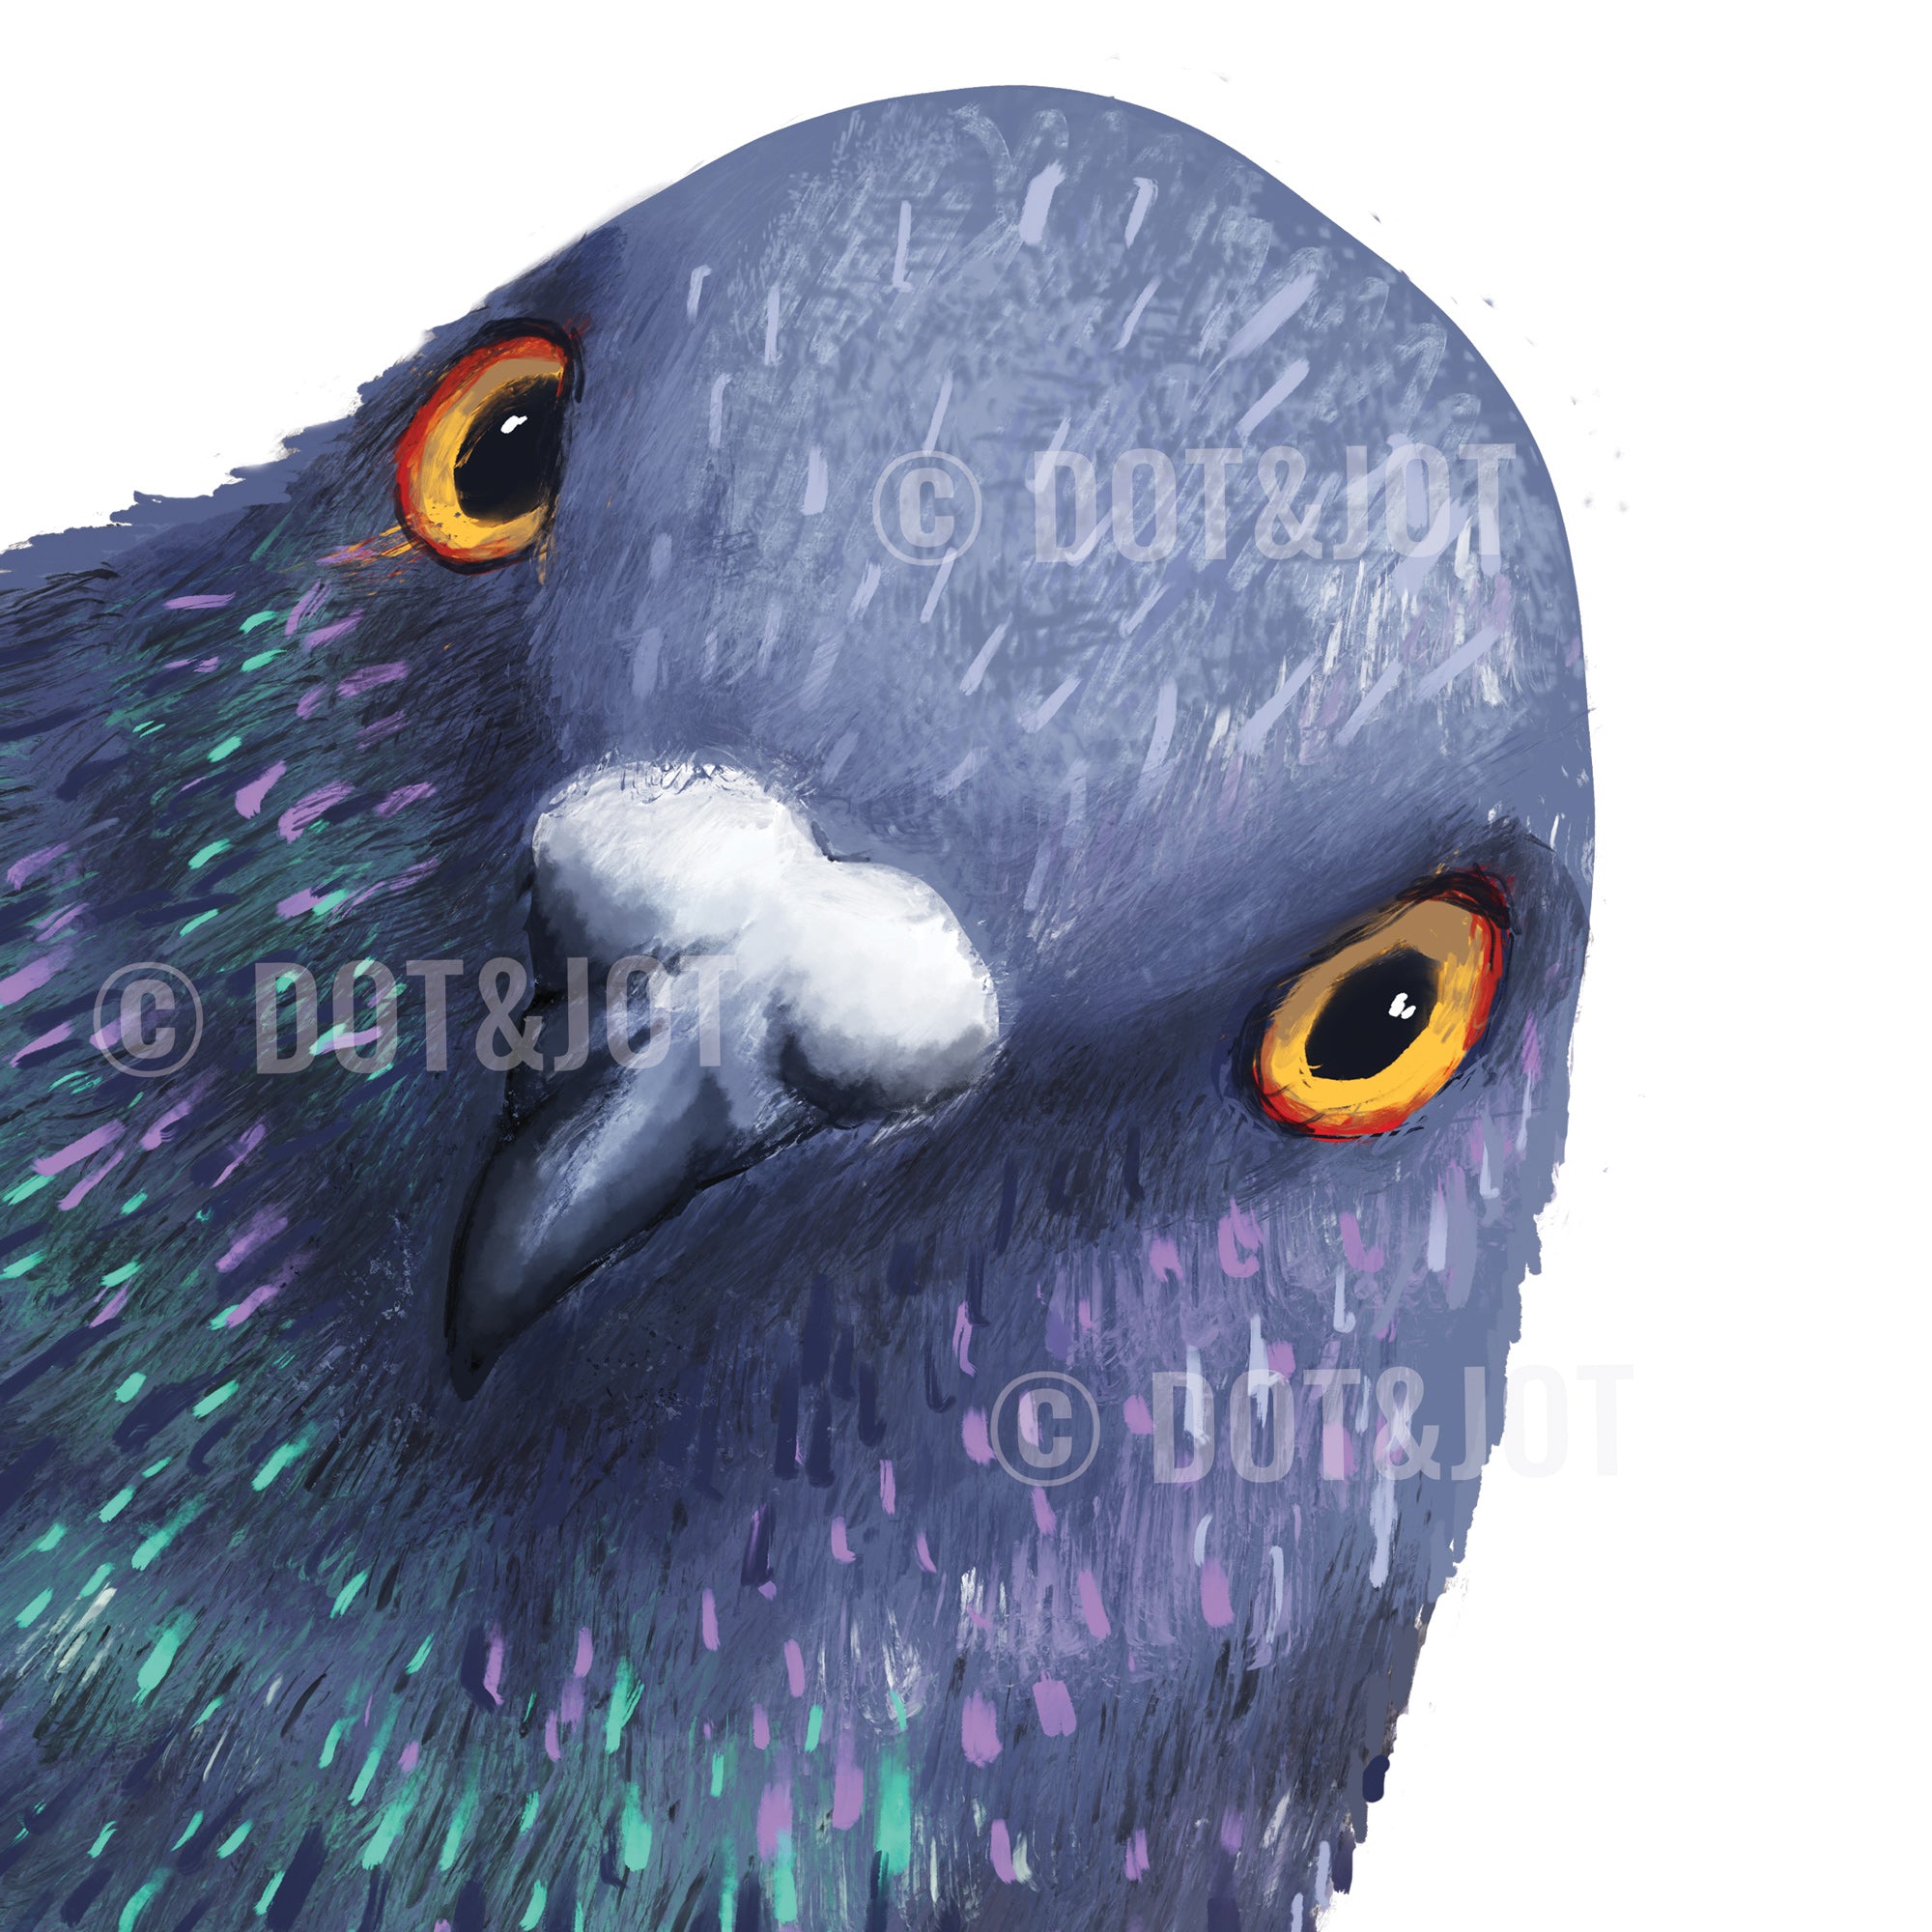 Peeking Pigeon Bird - Greeting Card